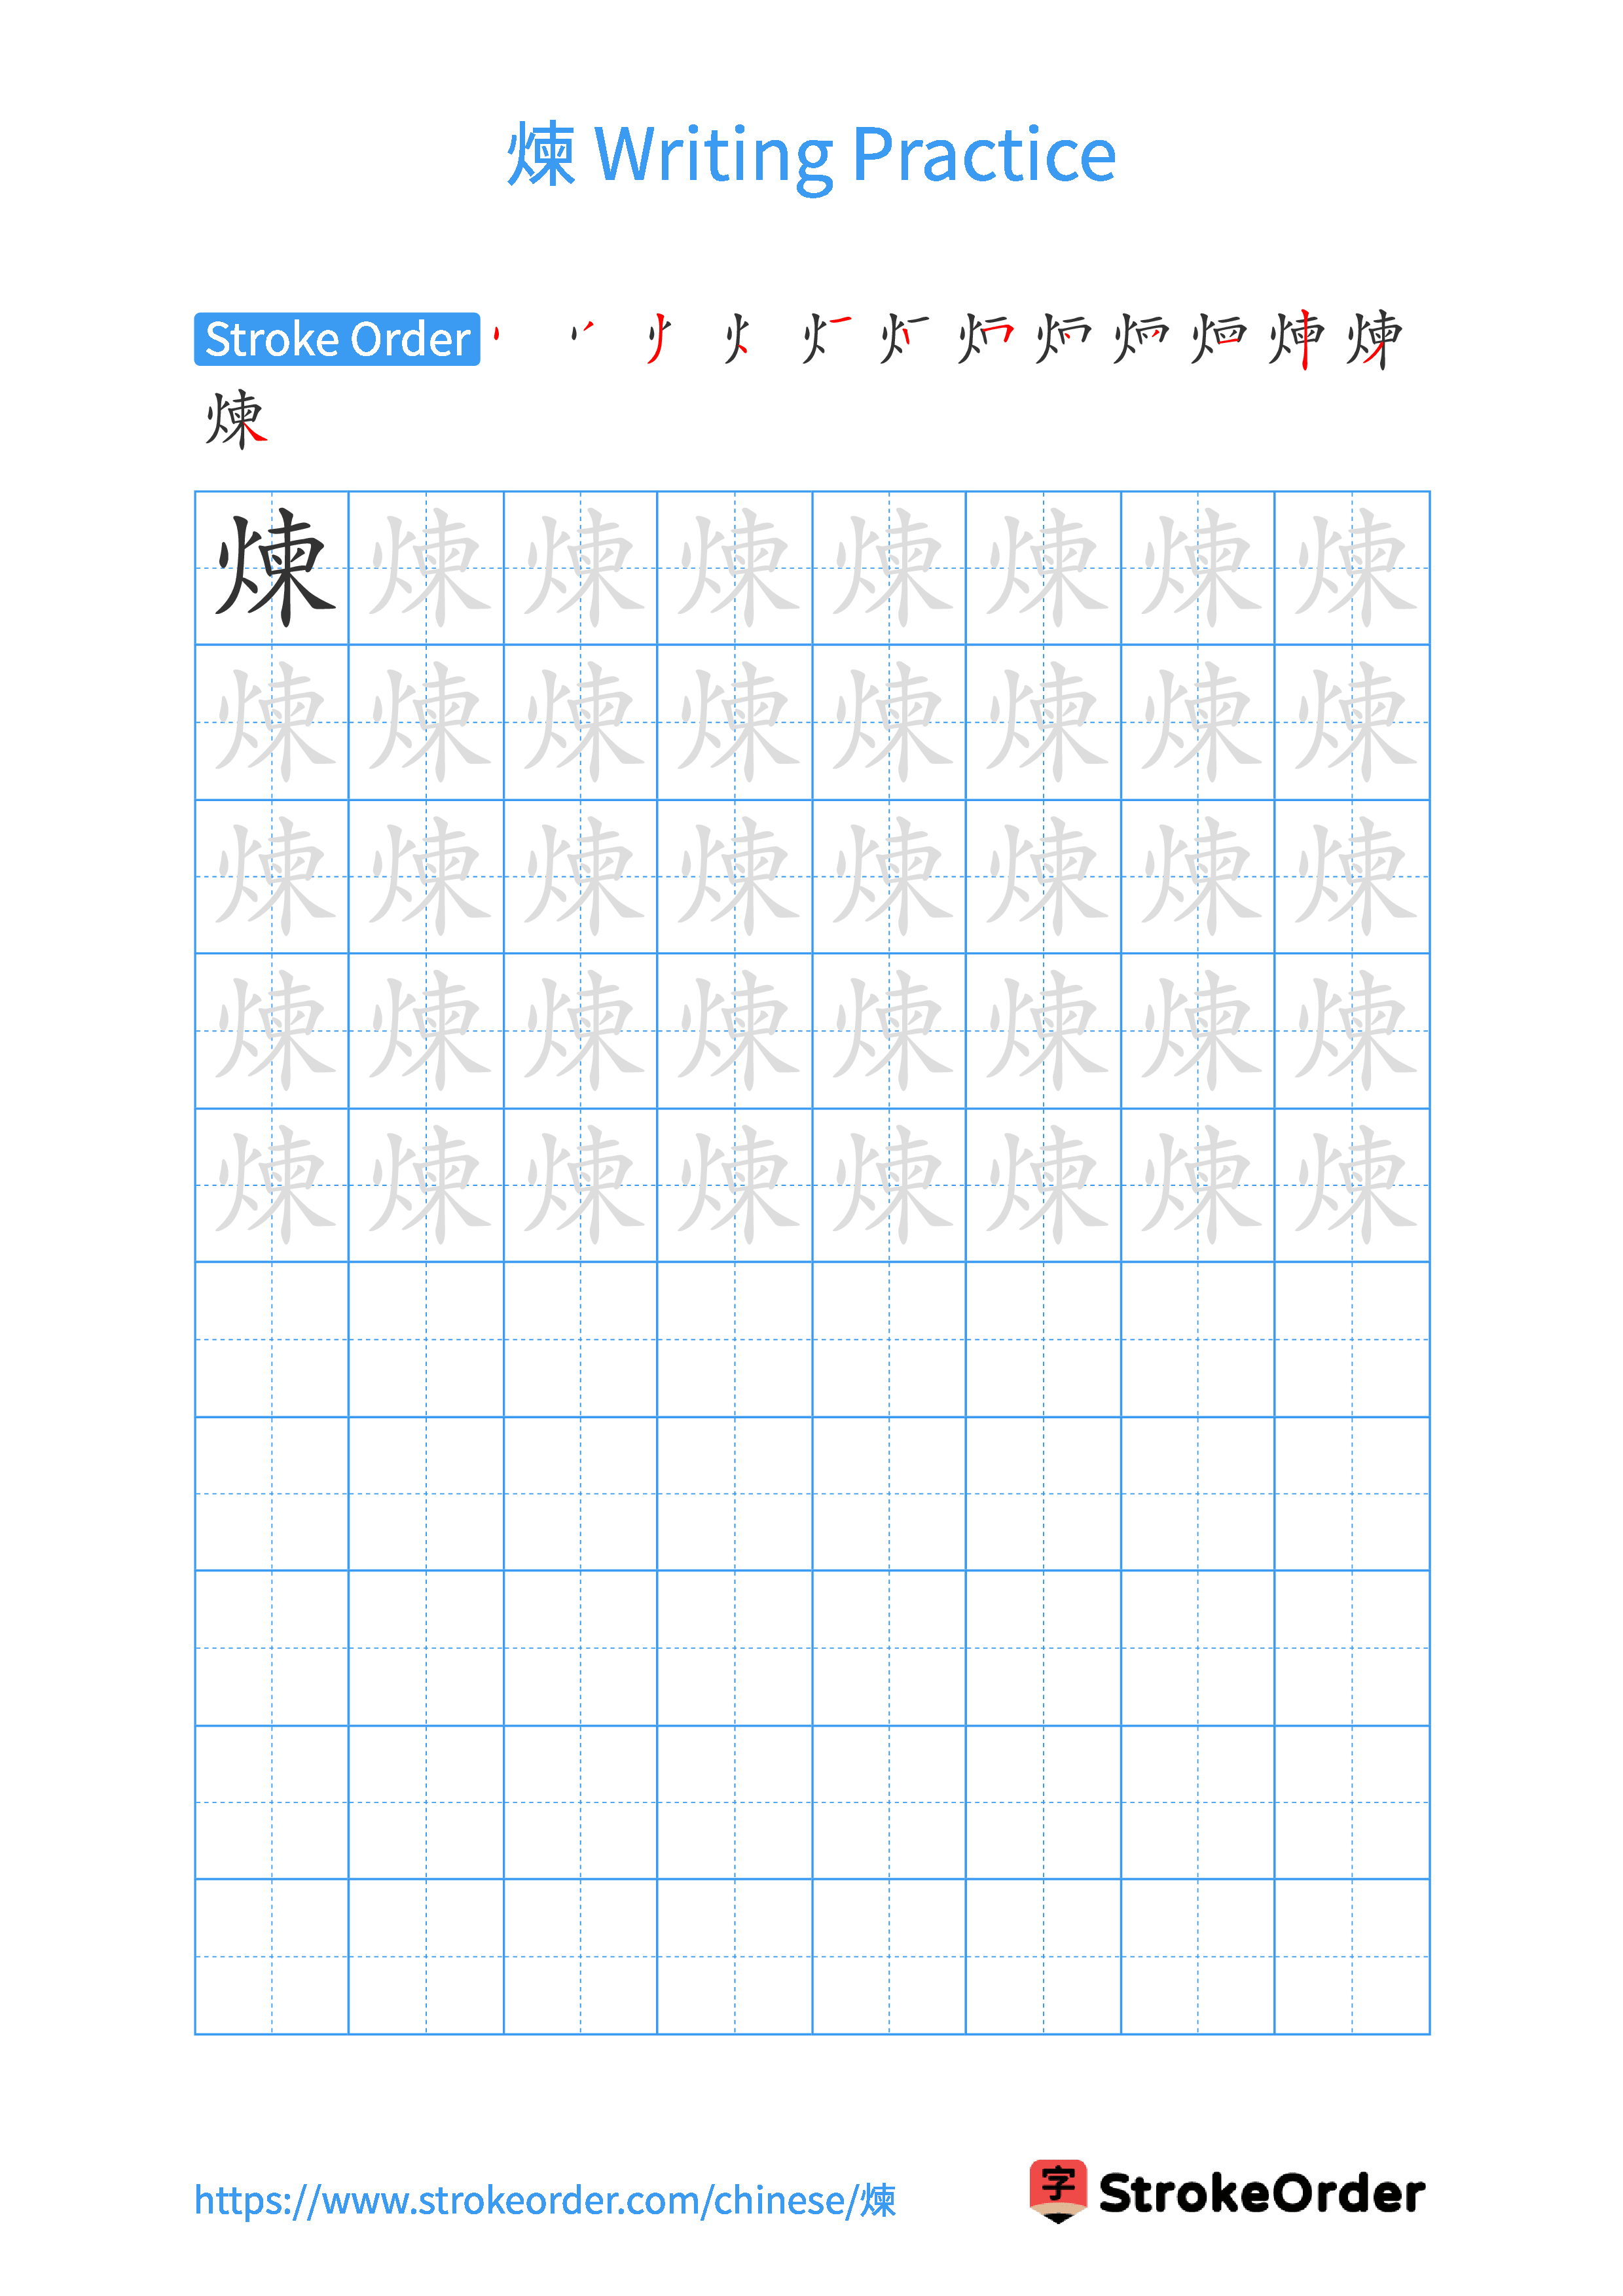 Printable Handwriting Practice Worksheet of the Chinese character 煉 in Portrait Orientation (Tian Zi Ge)